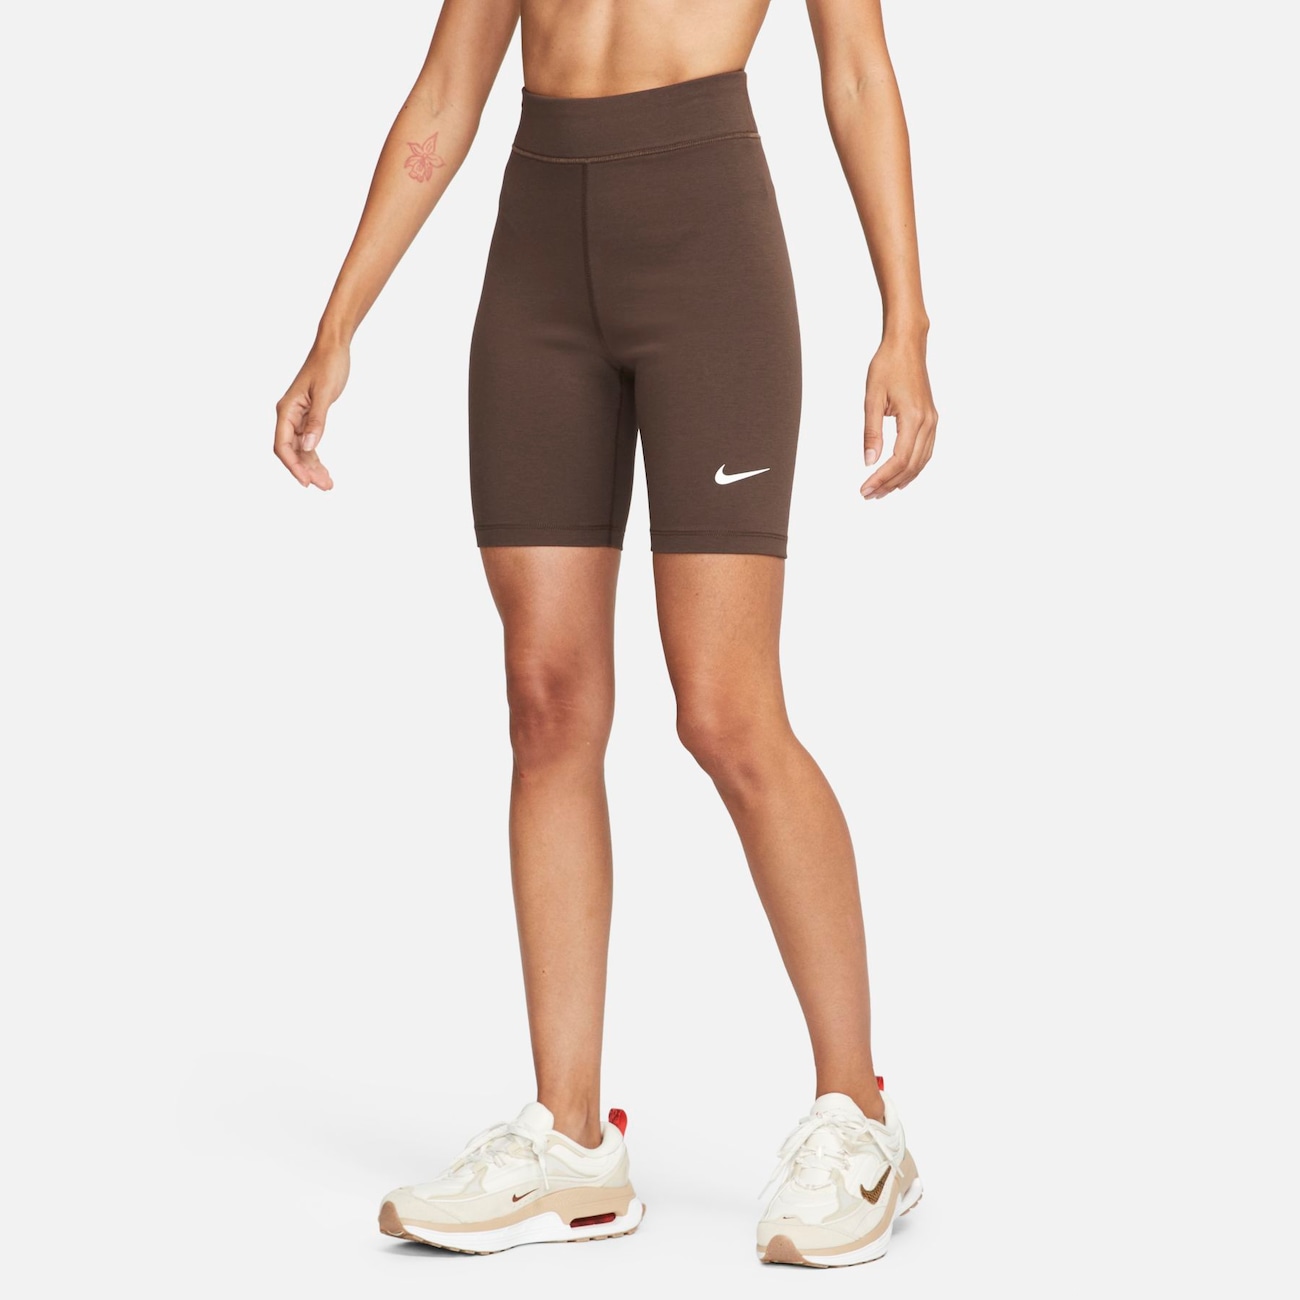 Nike Sportswear Classic-cykelshorts med høj talje (20 cm) til kvinder - brun